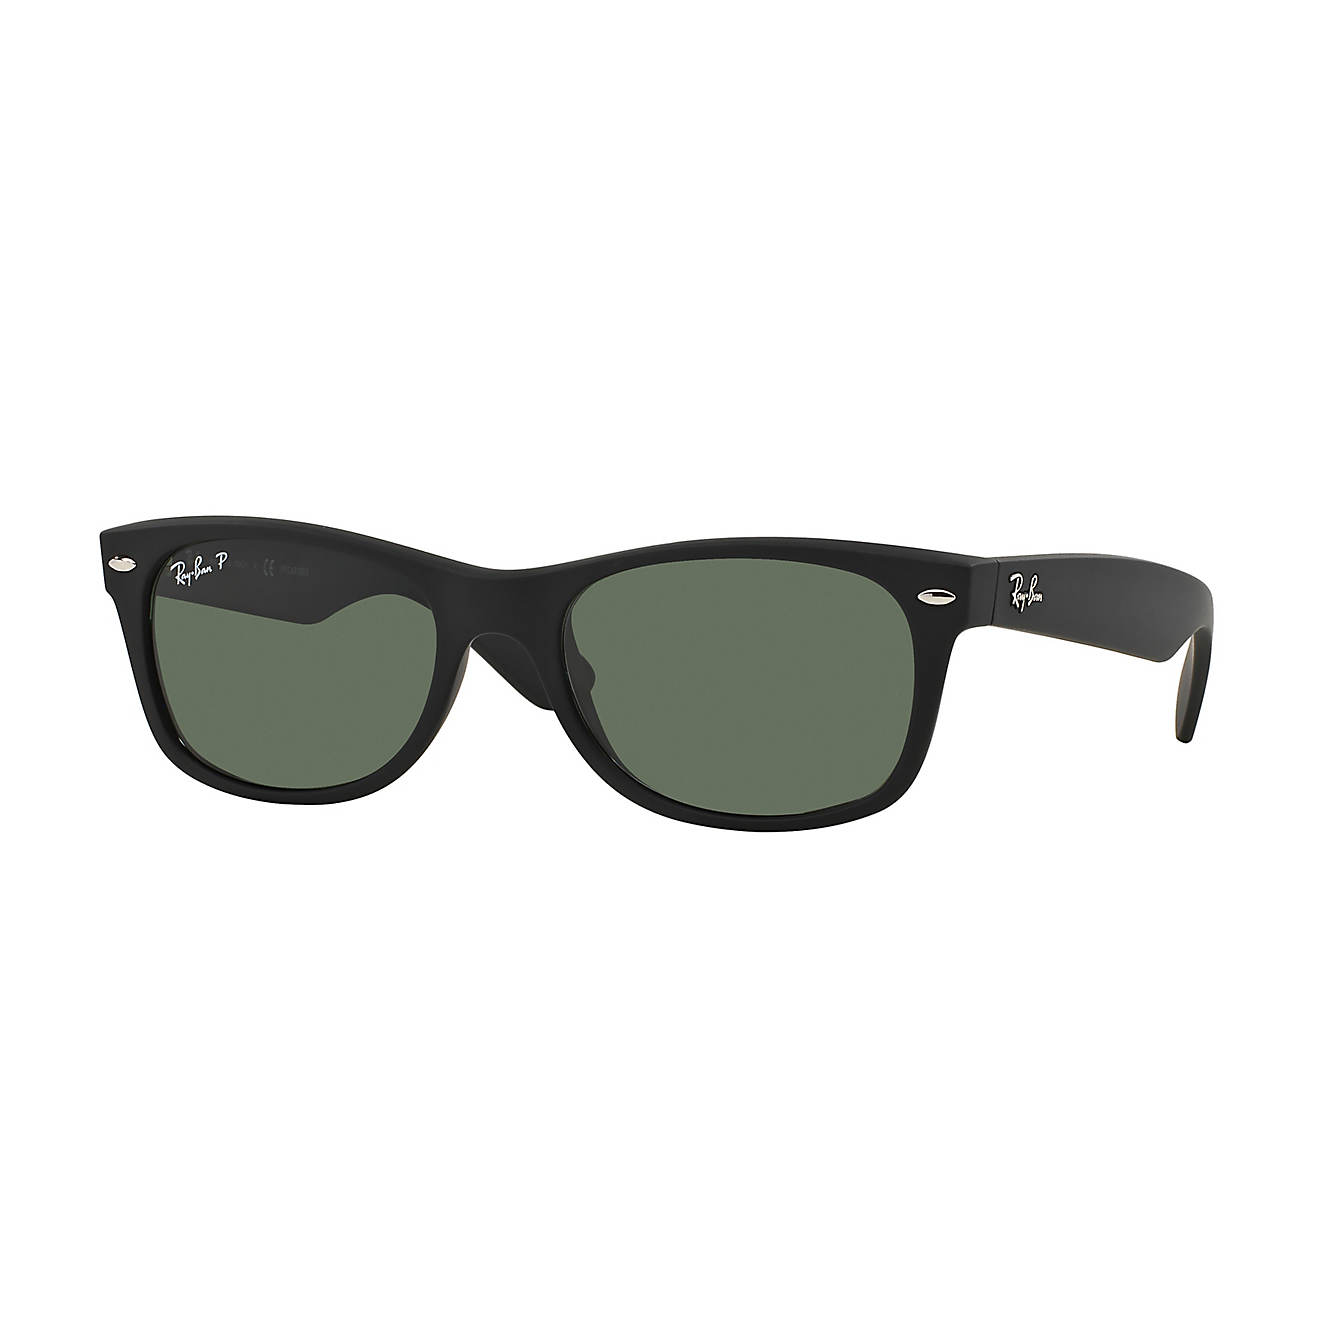 Ray-Ban New Wayfarer Icons Sunglasses | Free Shipping at Academy